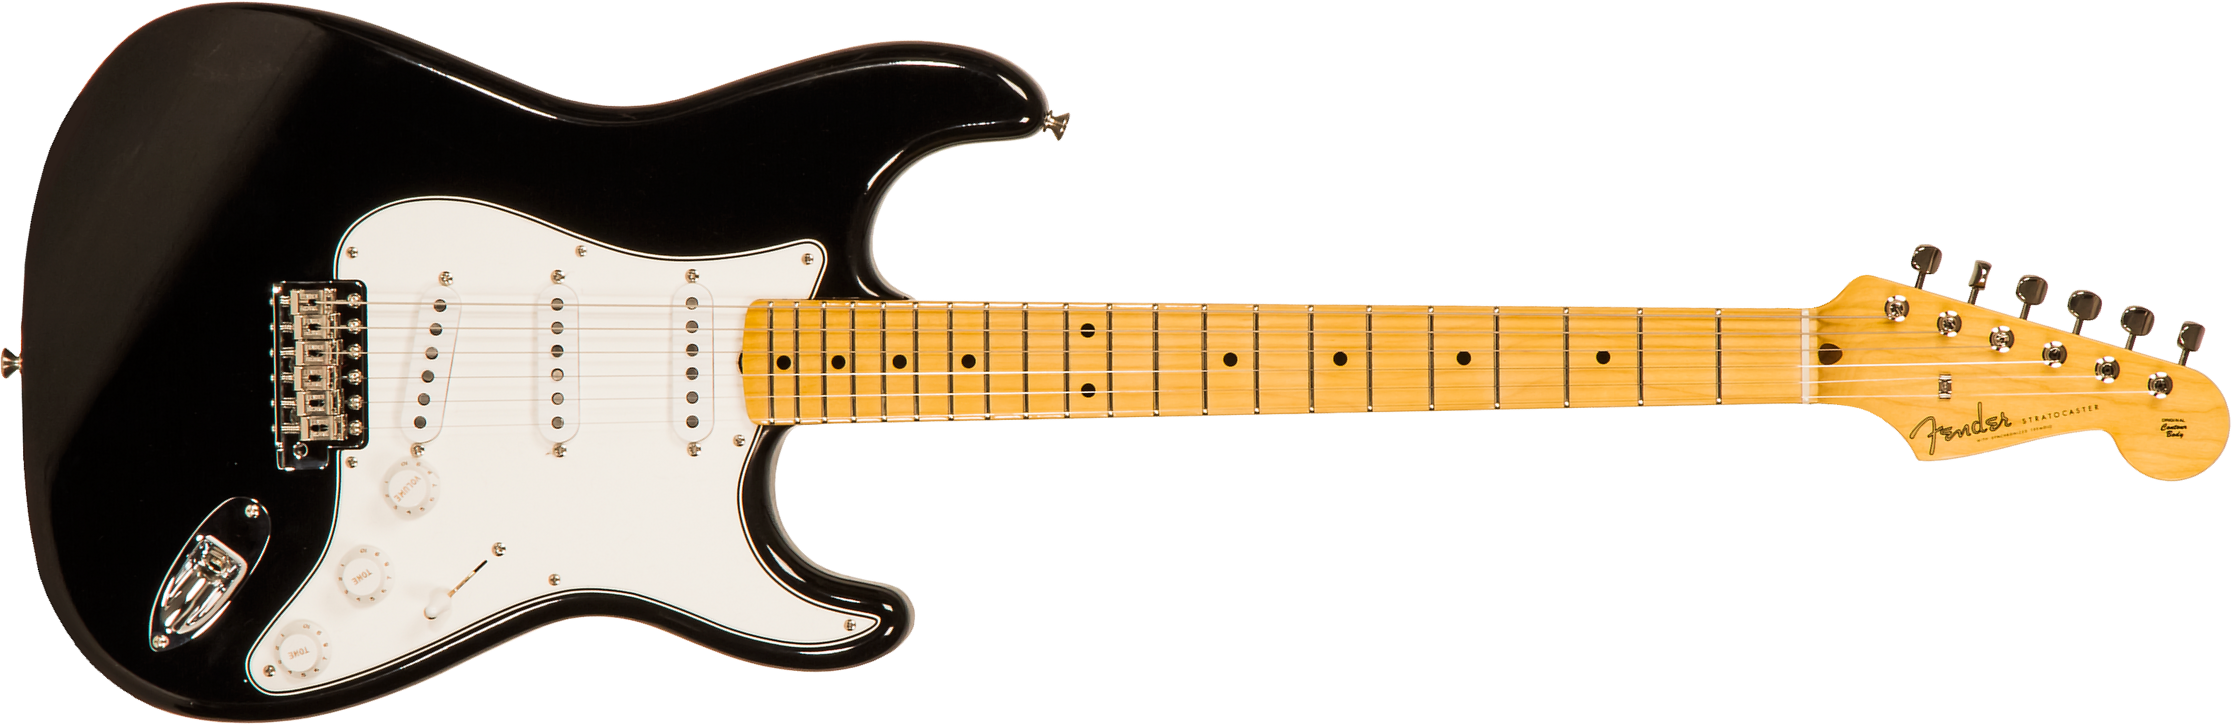 Fender Custom Shop Strat 1958 3s Trem Mn #r113828 - Closet Classic Black - Guitarra eléctrica con forma de str. - Main picture